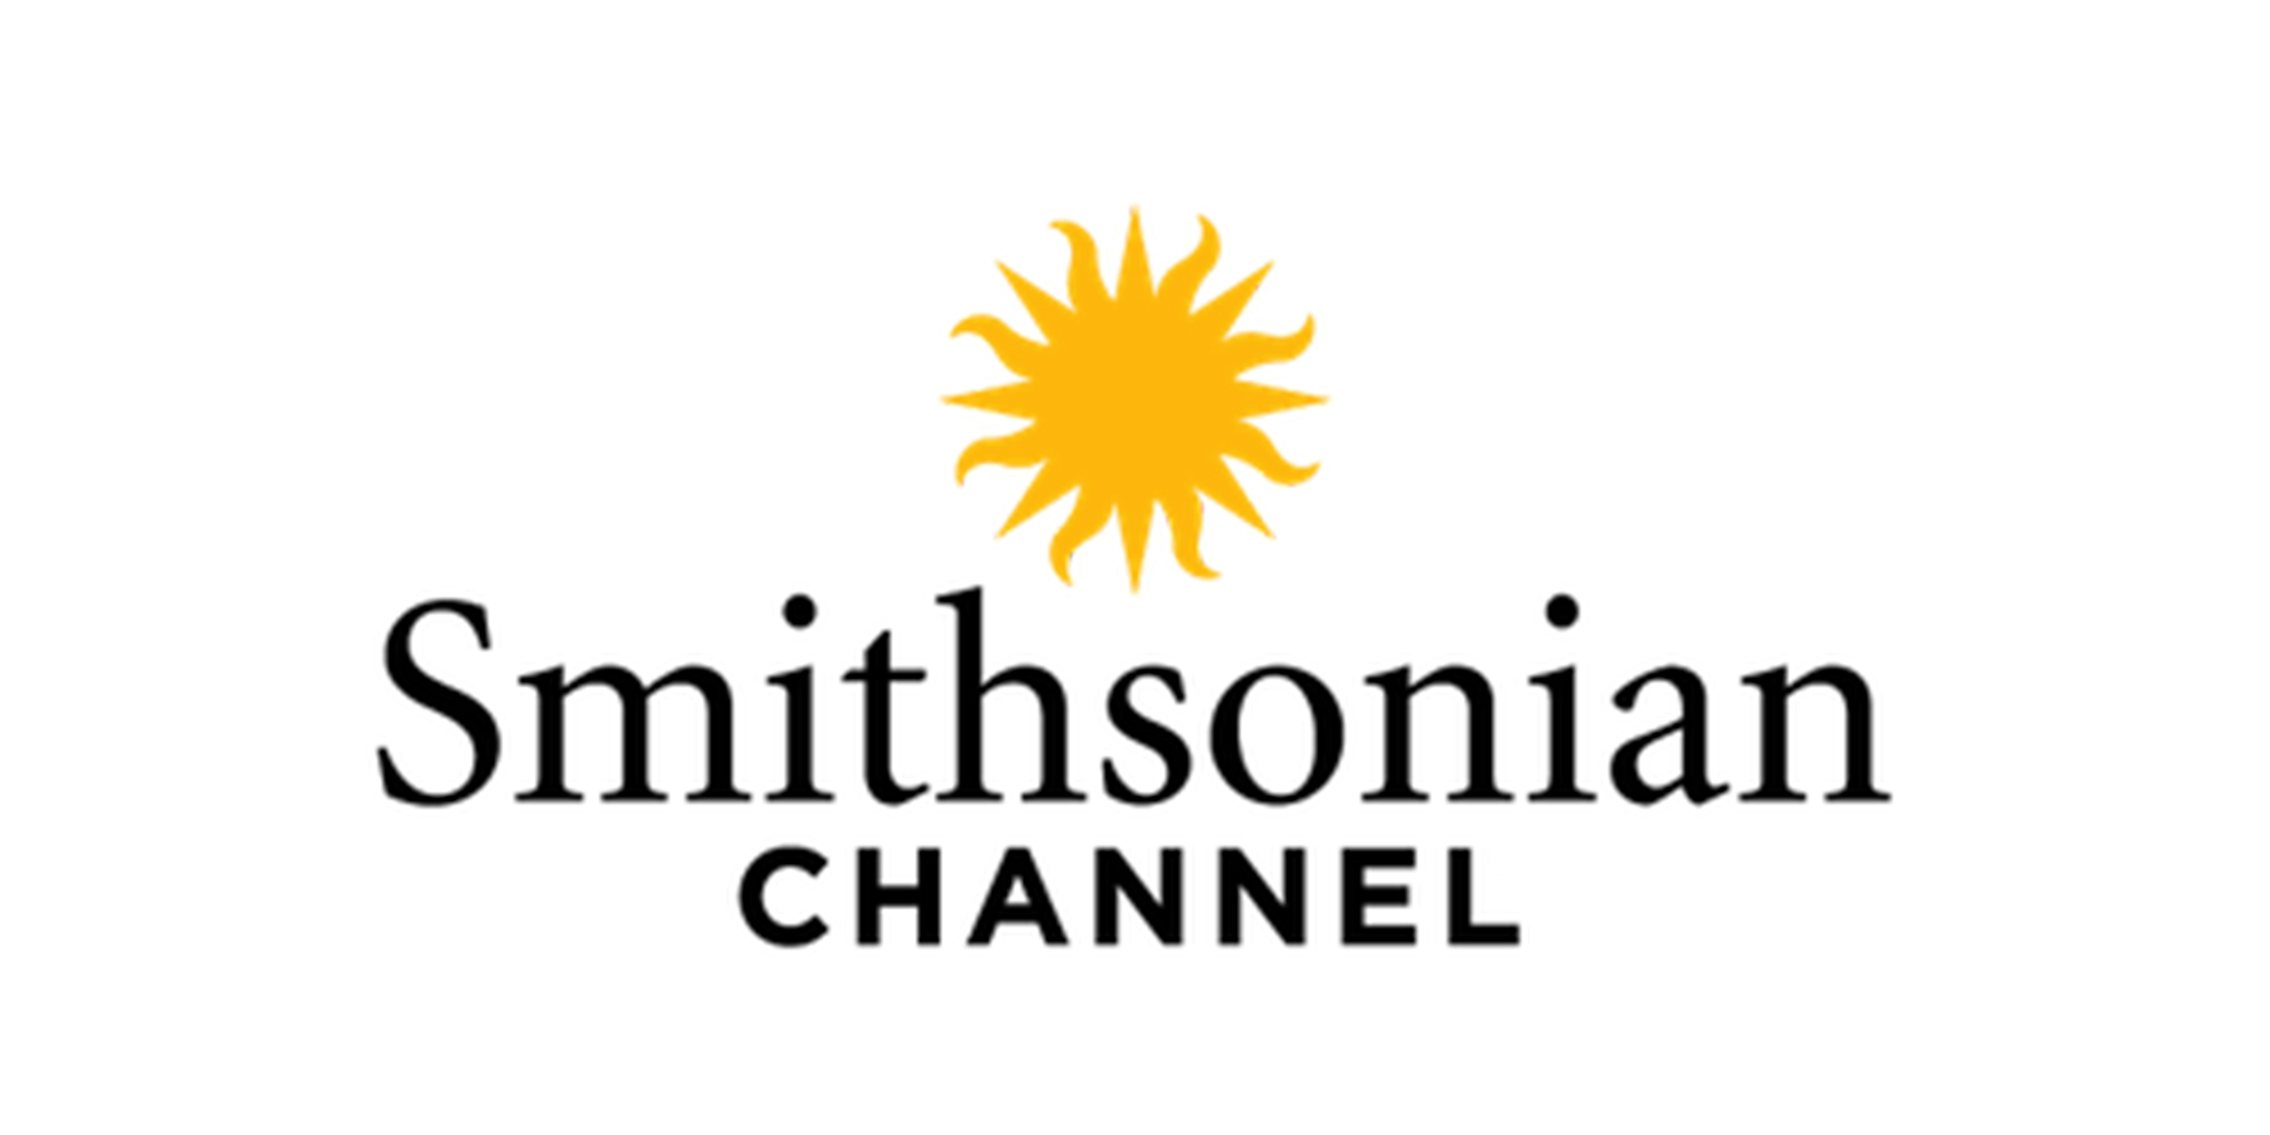 Smithsonian Channel live stream